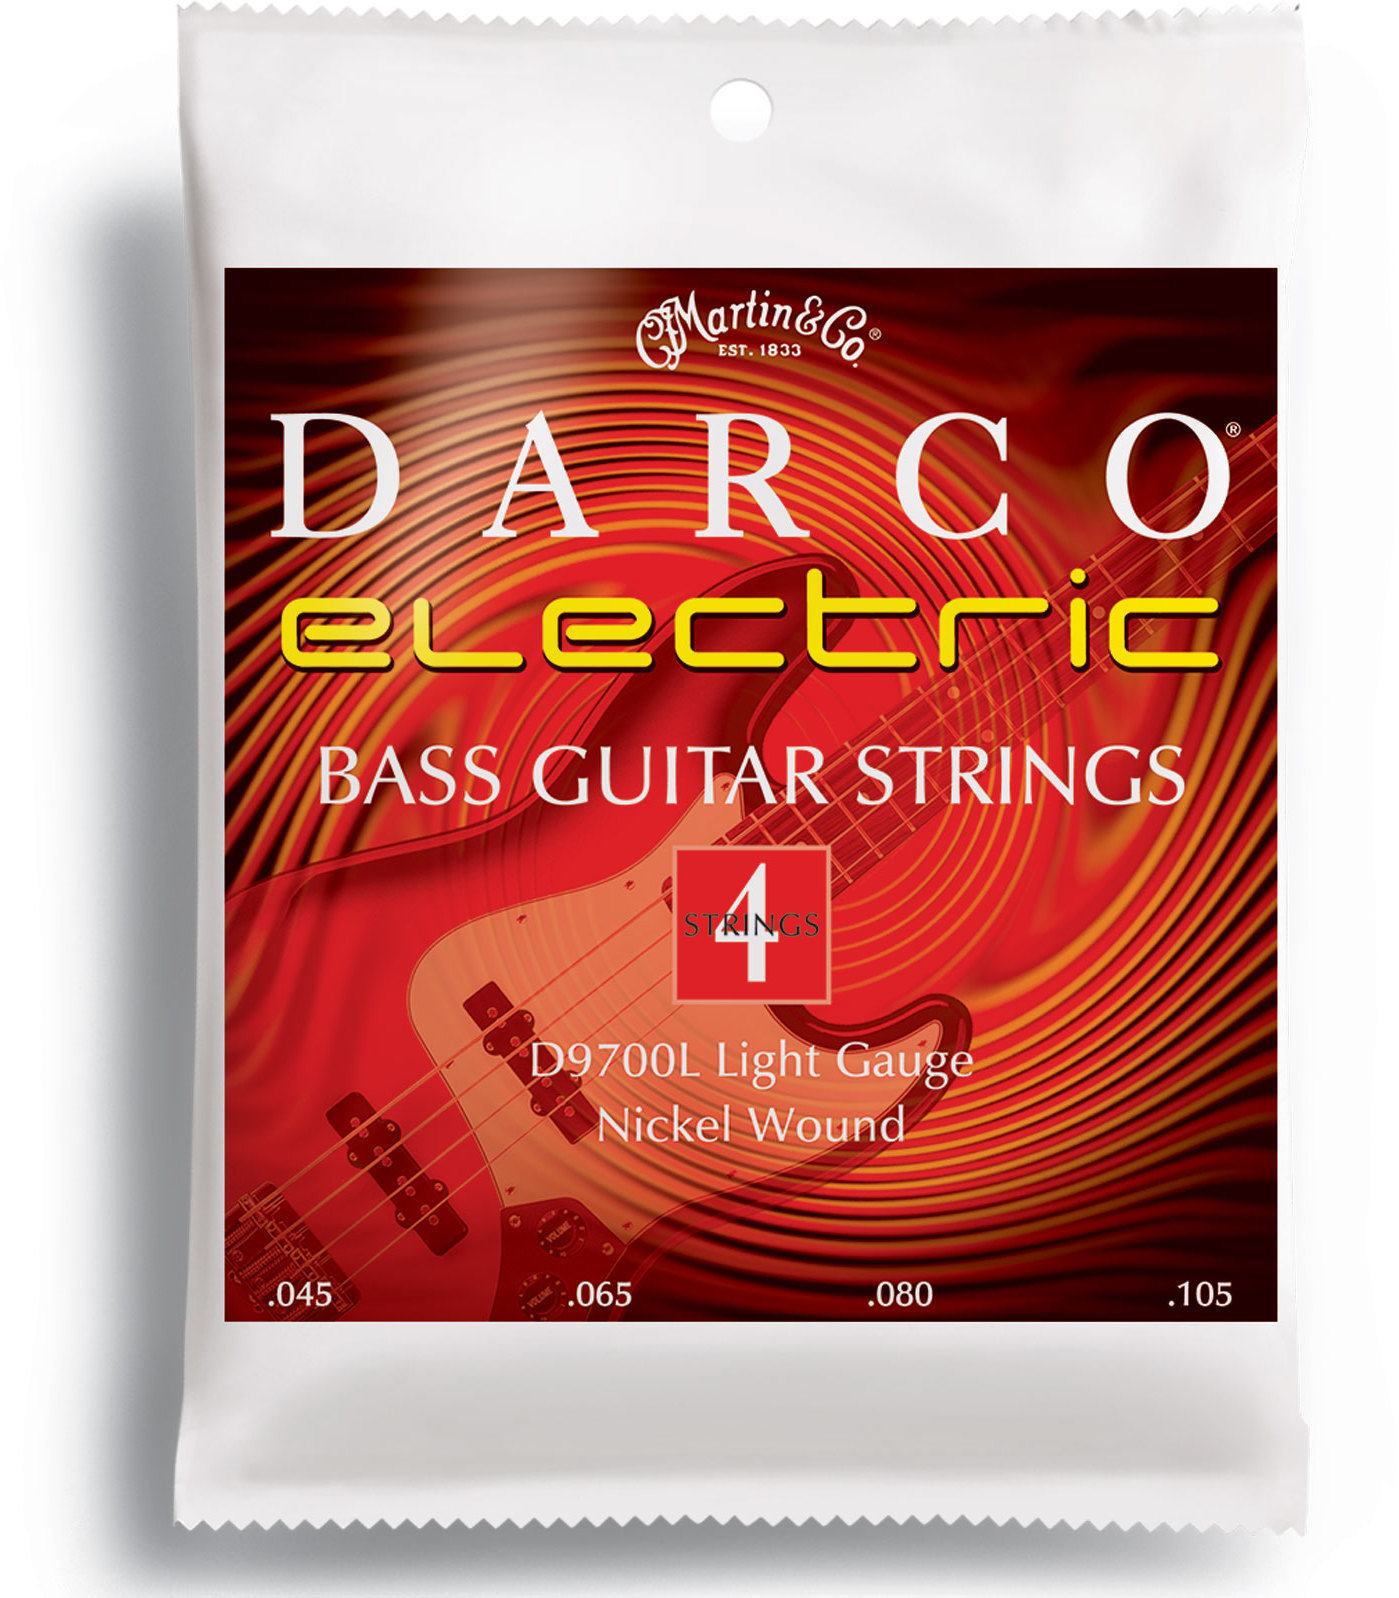 Struny pre basgitaru Darco D9700L Darco Four String Electric Bass, Light